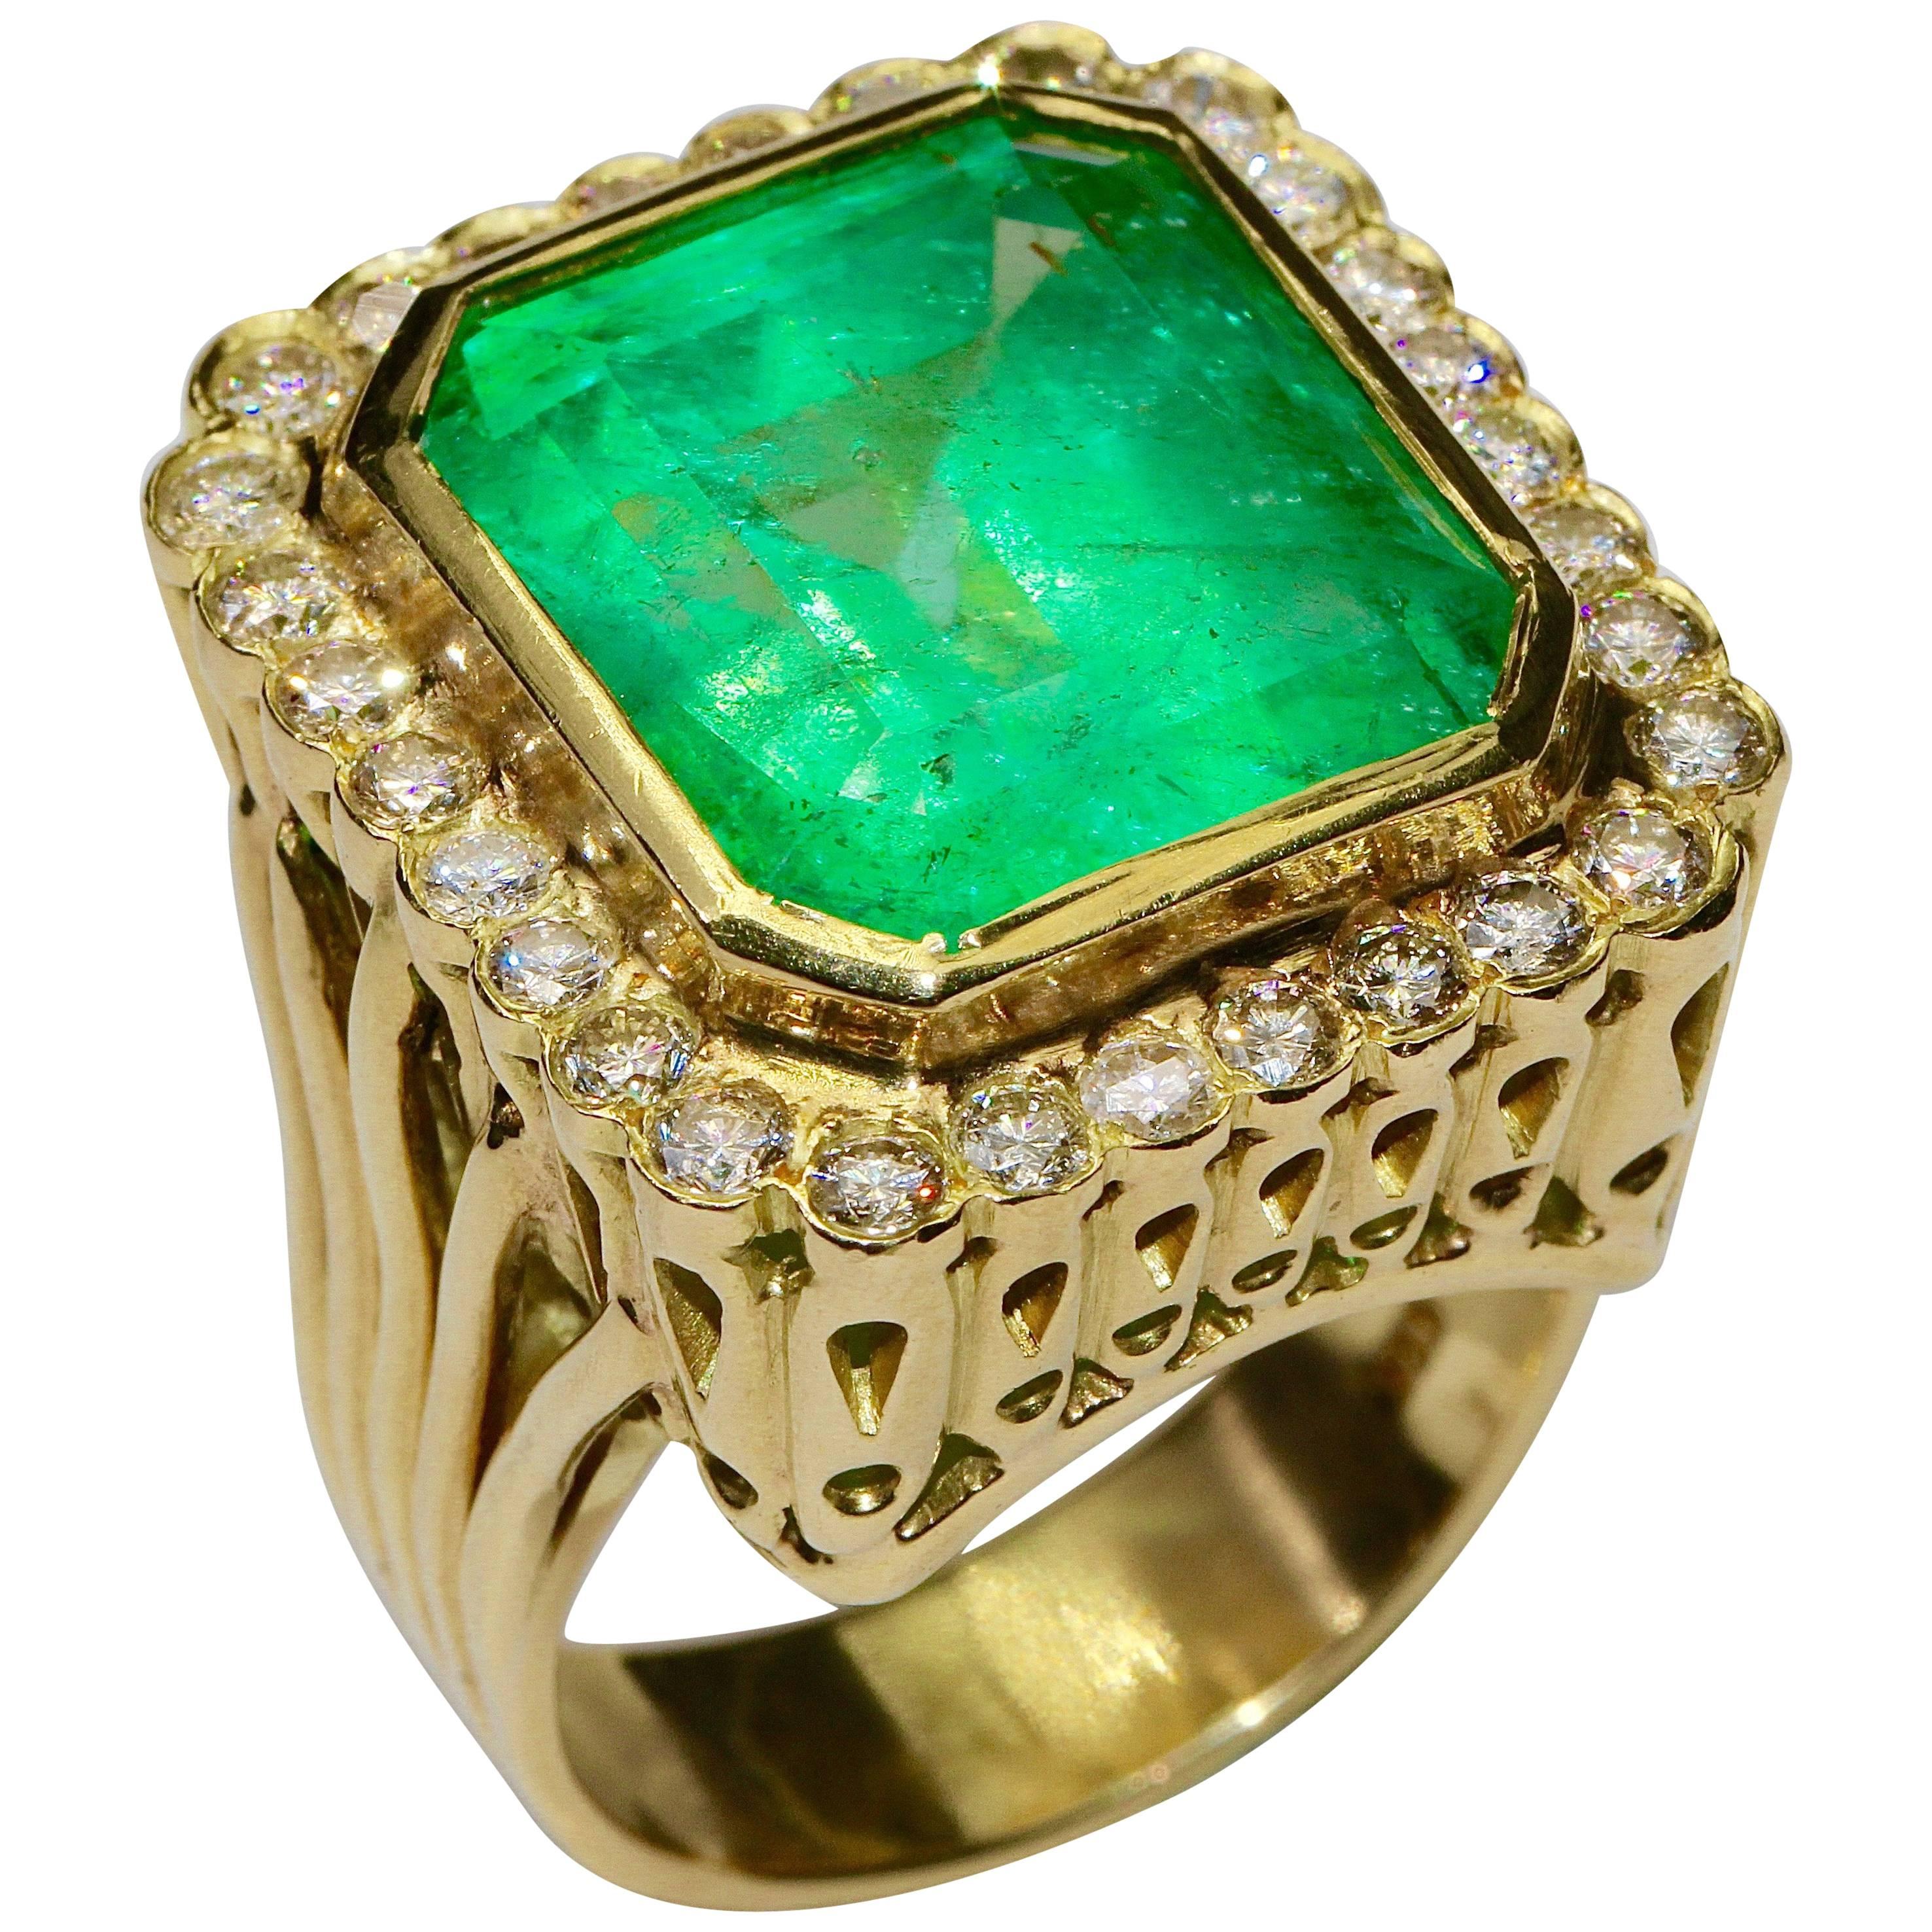 24 Carat Pear Shape Diamond Engagement Ring GIA Certified F VVS2 For Sale  at 1stDibs | 24 carat diamond price, 24 carat diamond ring price, .24 carat  diamond price